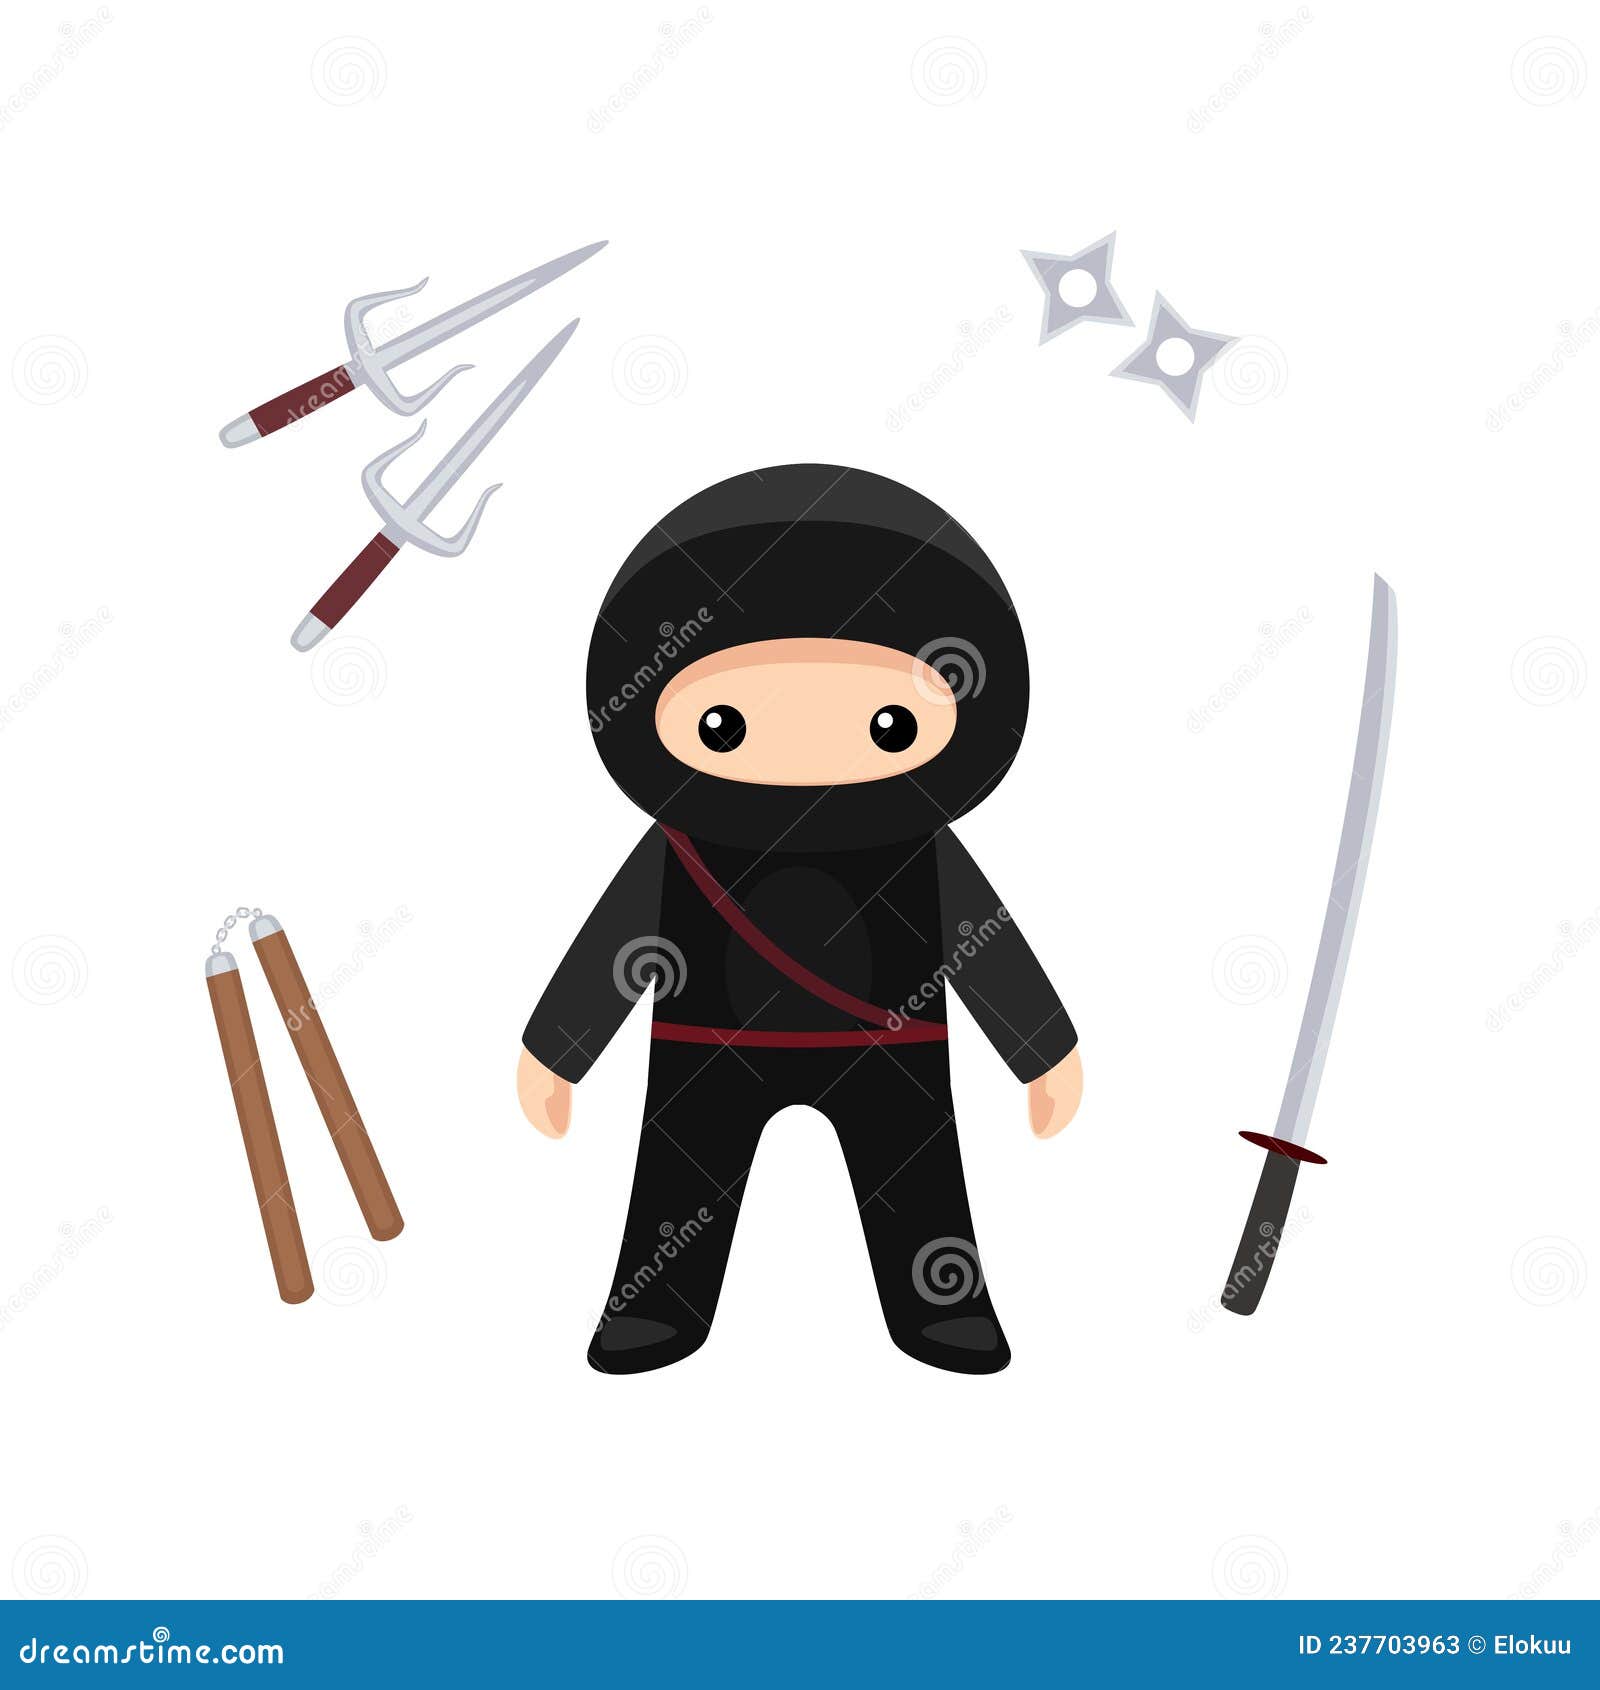 https://thumbs.dreamstime.com/z/cute-ninja-shinobi-standing-weapons-katana-sword-sai-knife-nunchaku-shuriken-vector-illustration-isolated-white-background-237703963.jpg